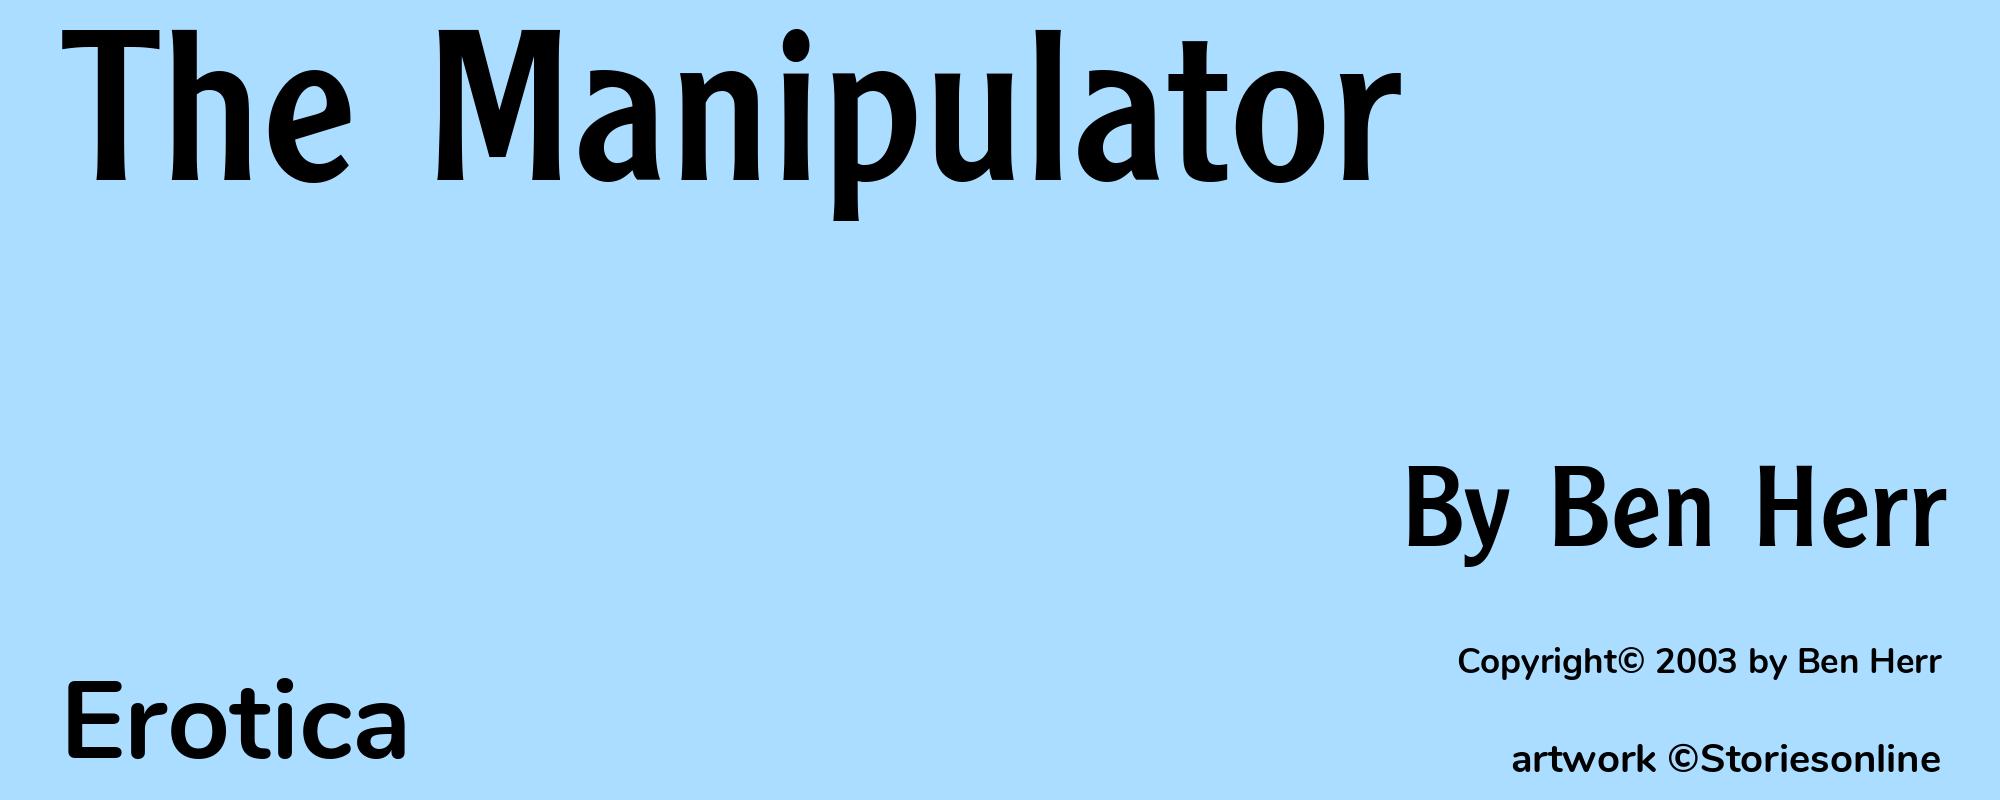 The Manipulator - Cover